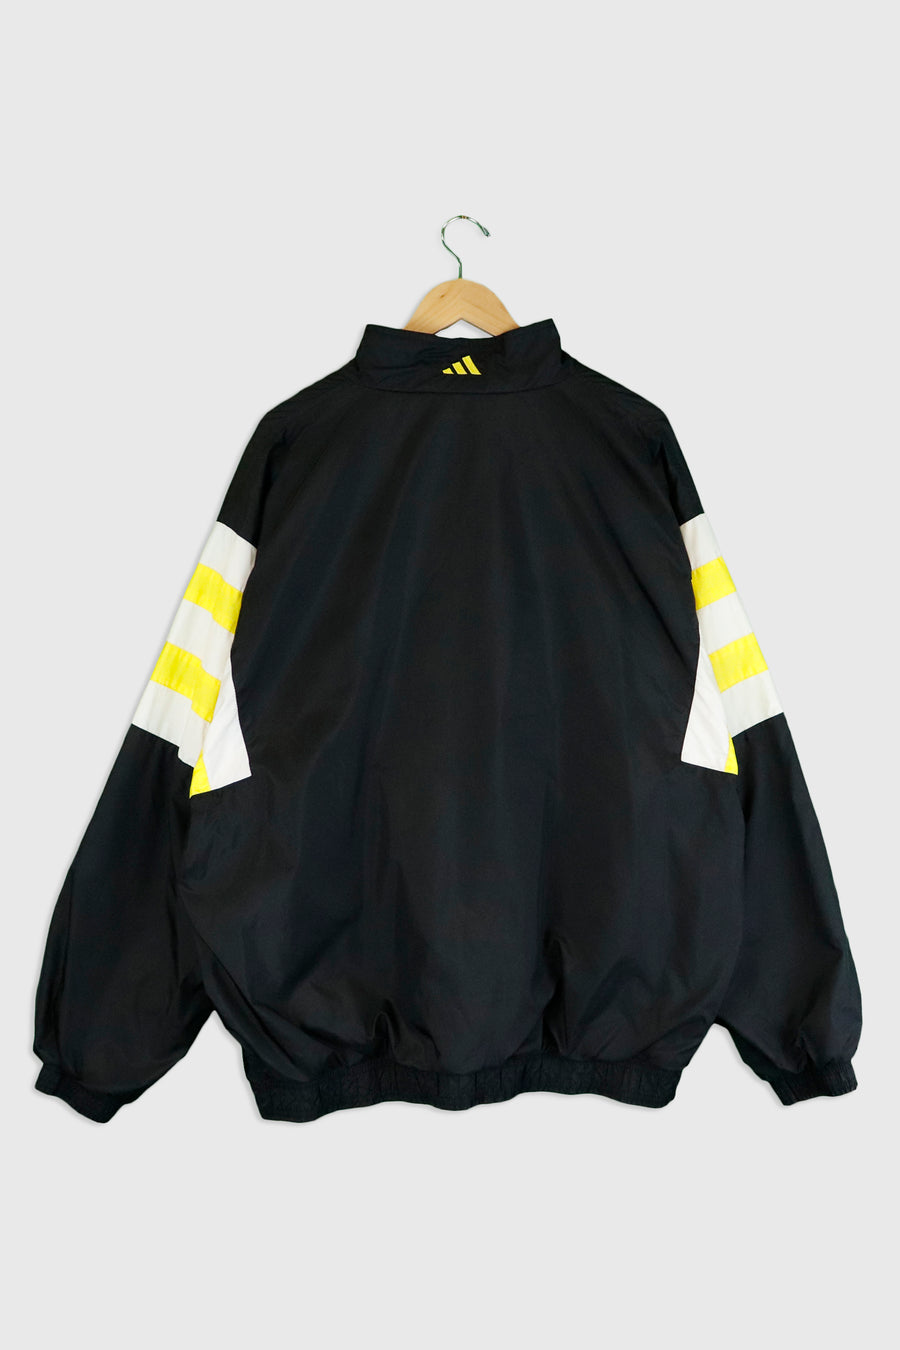 Vintage Adidas Lightweight Jacket Sz XXL